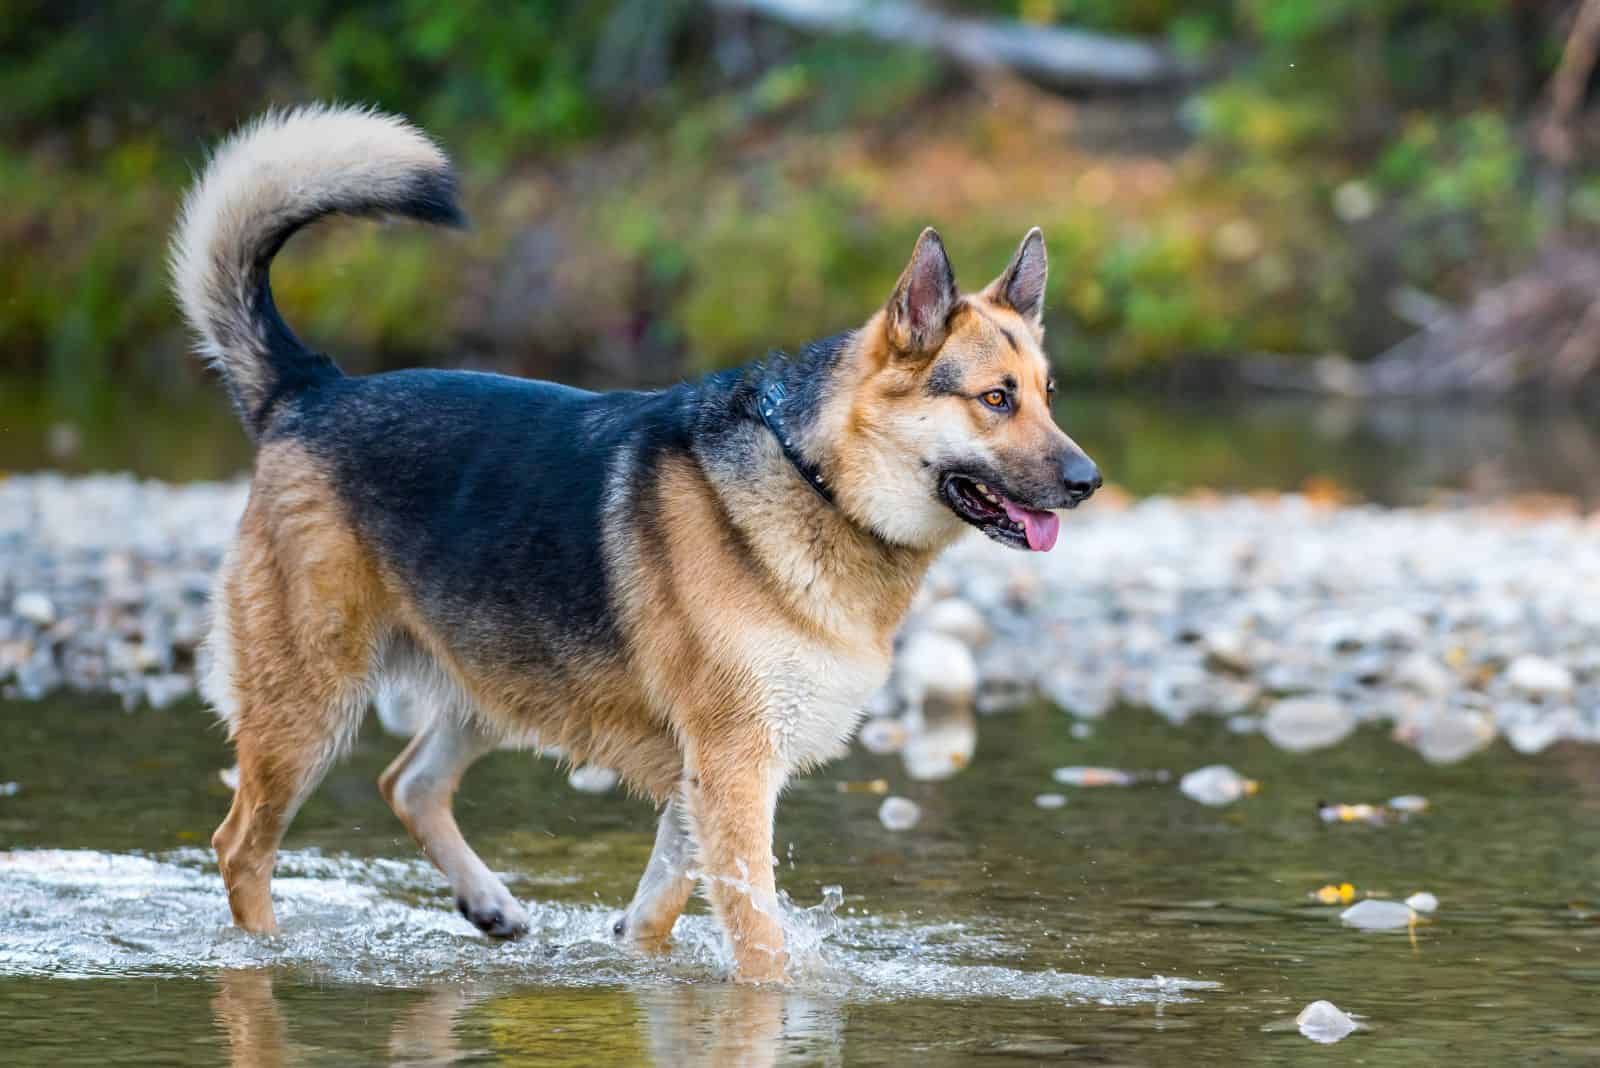 German Shepherd Alaskan Malamute Mix walks on water